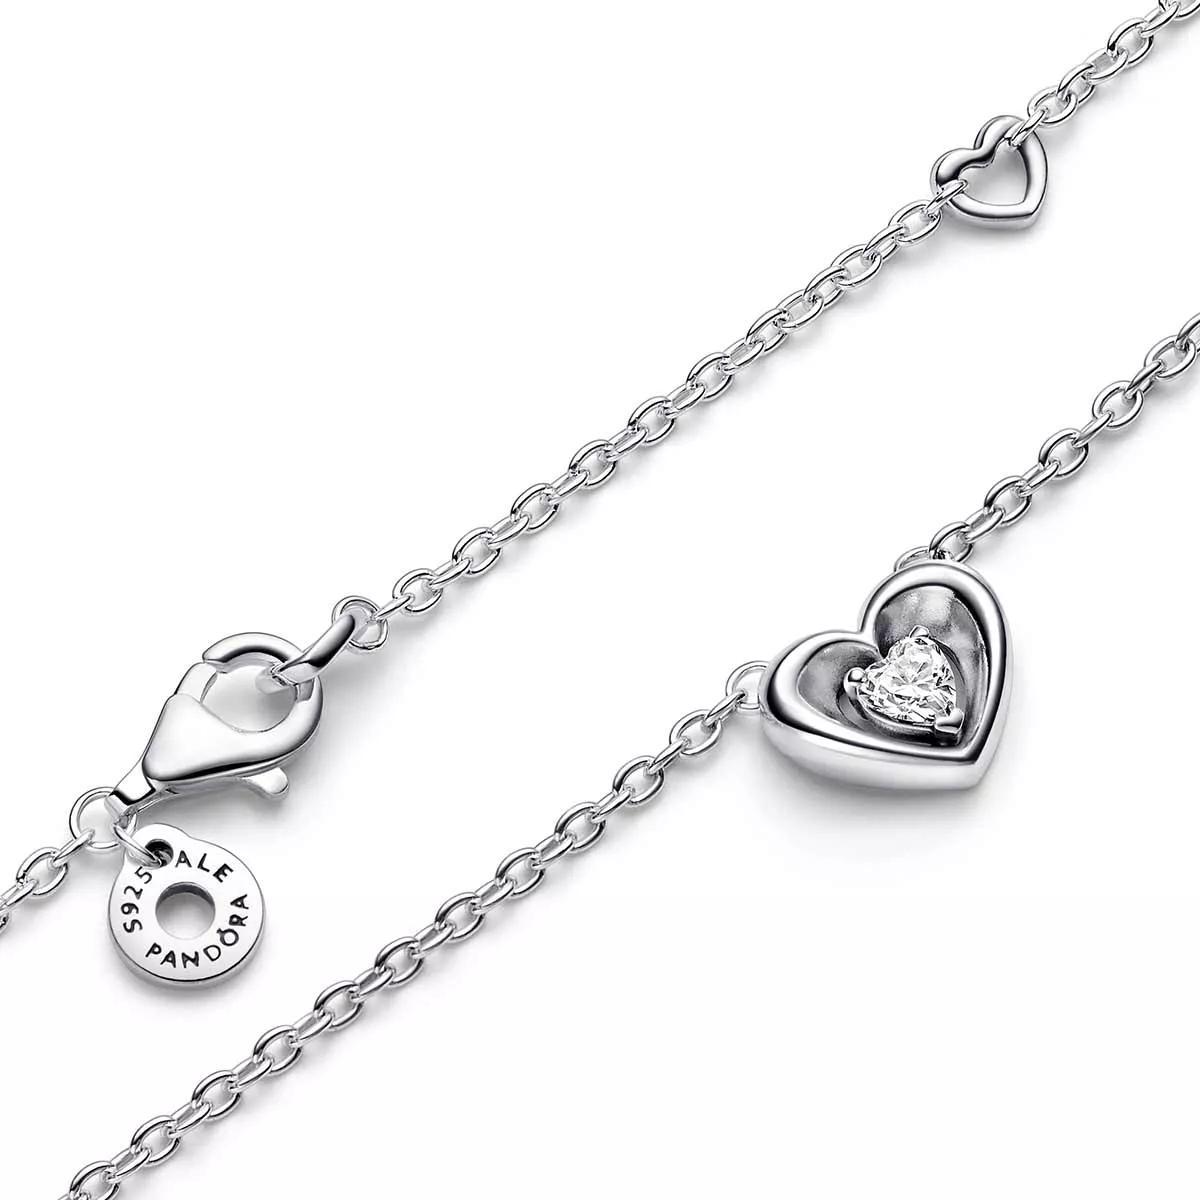 pandora bijouterie, heart sterling silver collier with clear cubic zir en white - collierpour dames